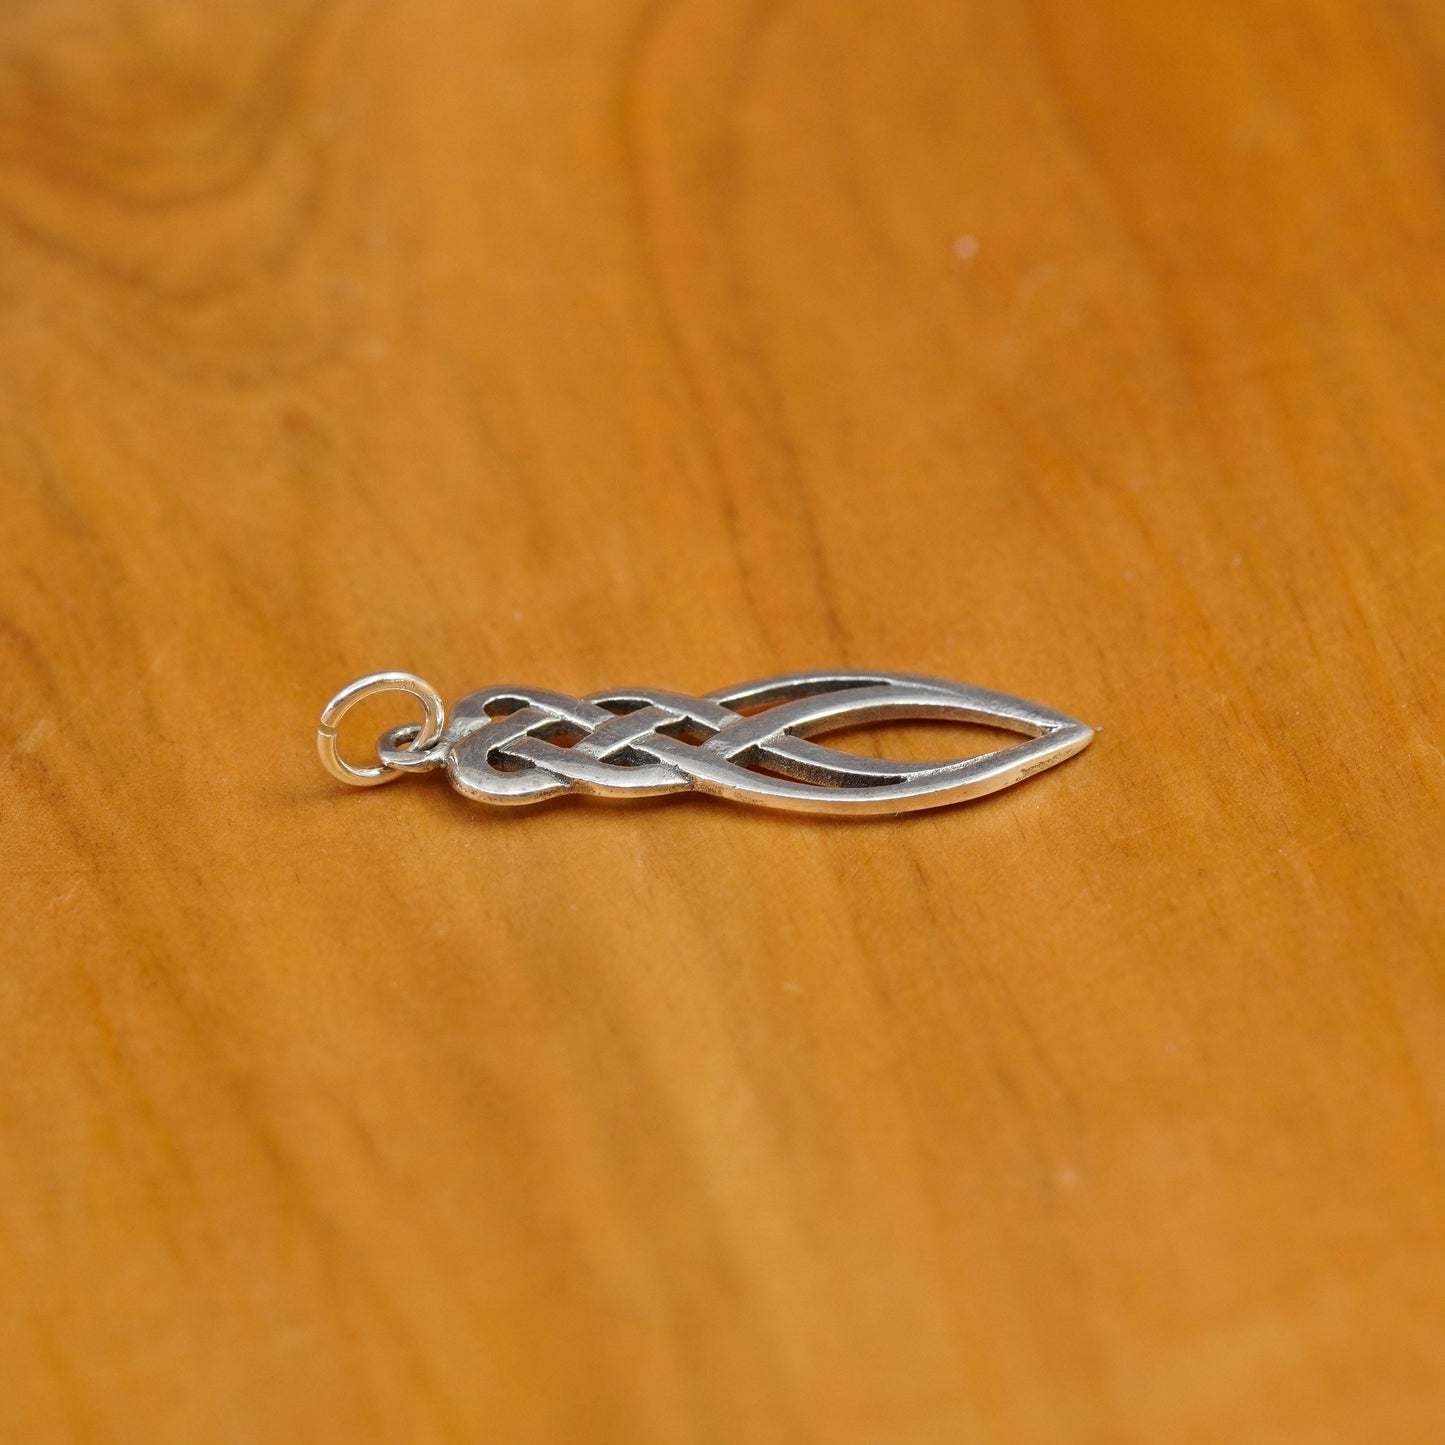 Vintage Sterling silver handmade pendant, 925 irish Celtic knot